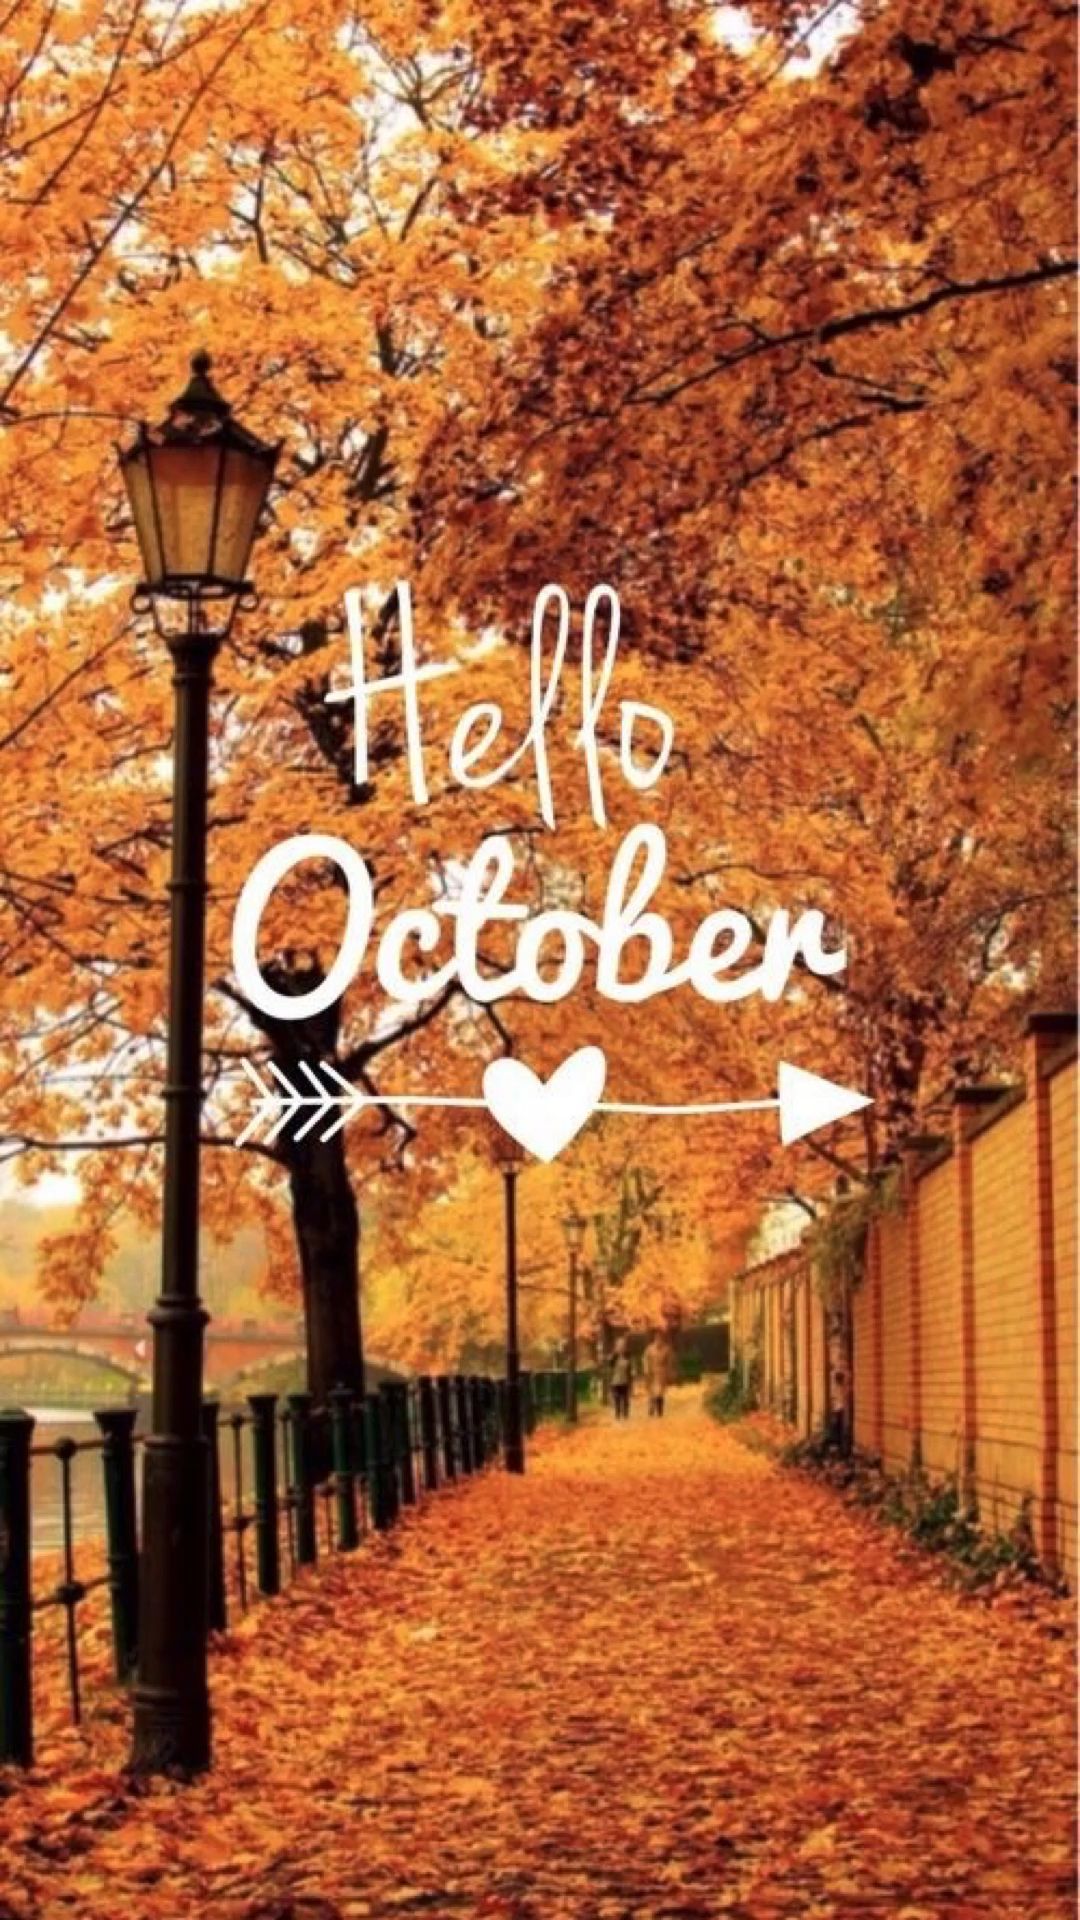 Hello October Wallpapers